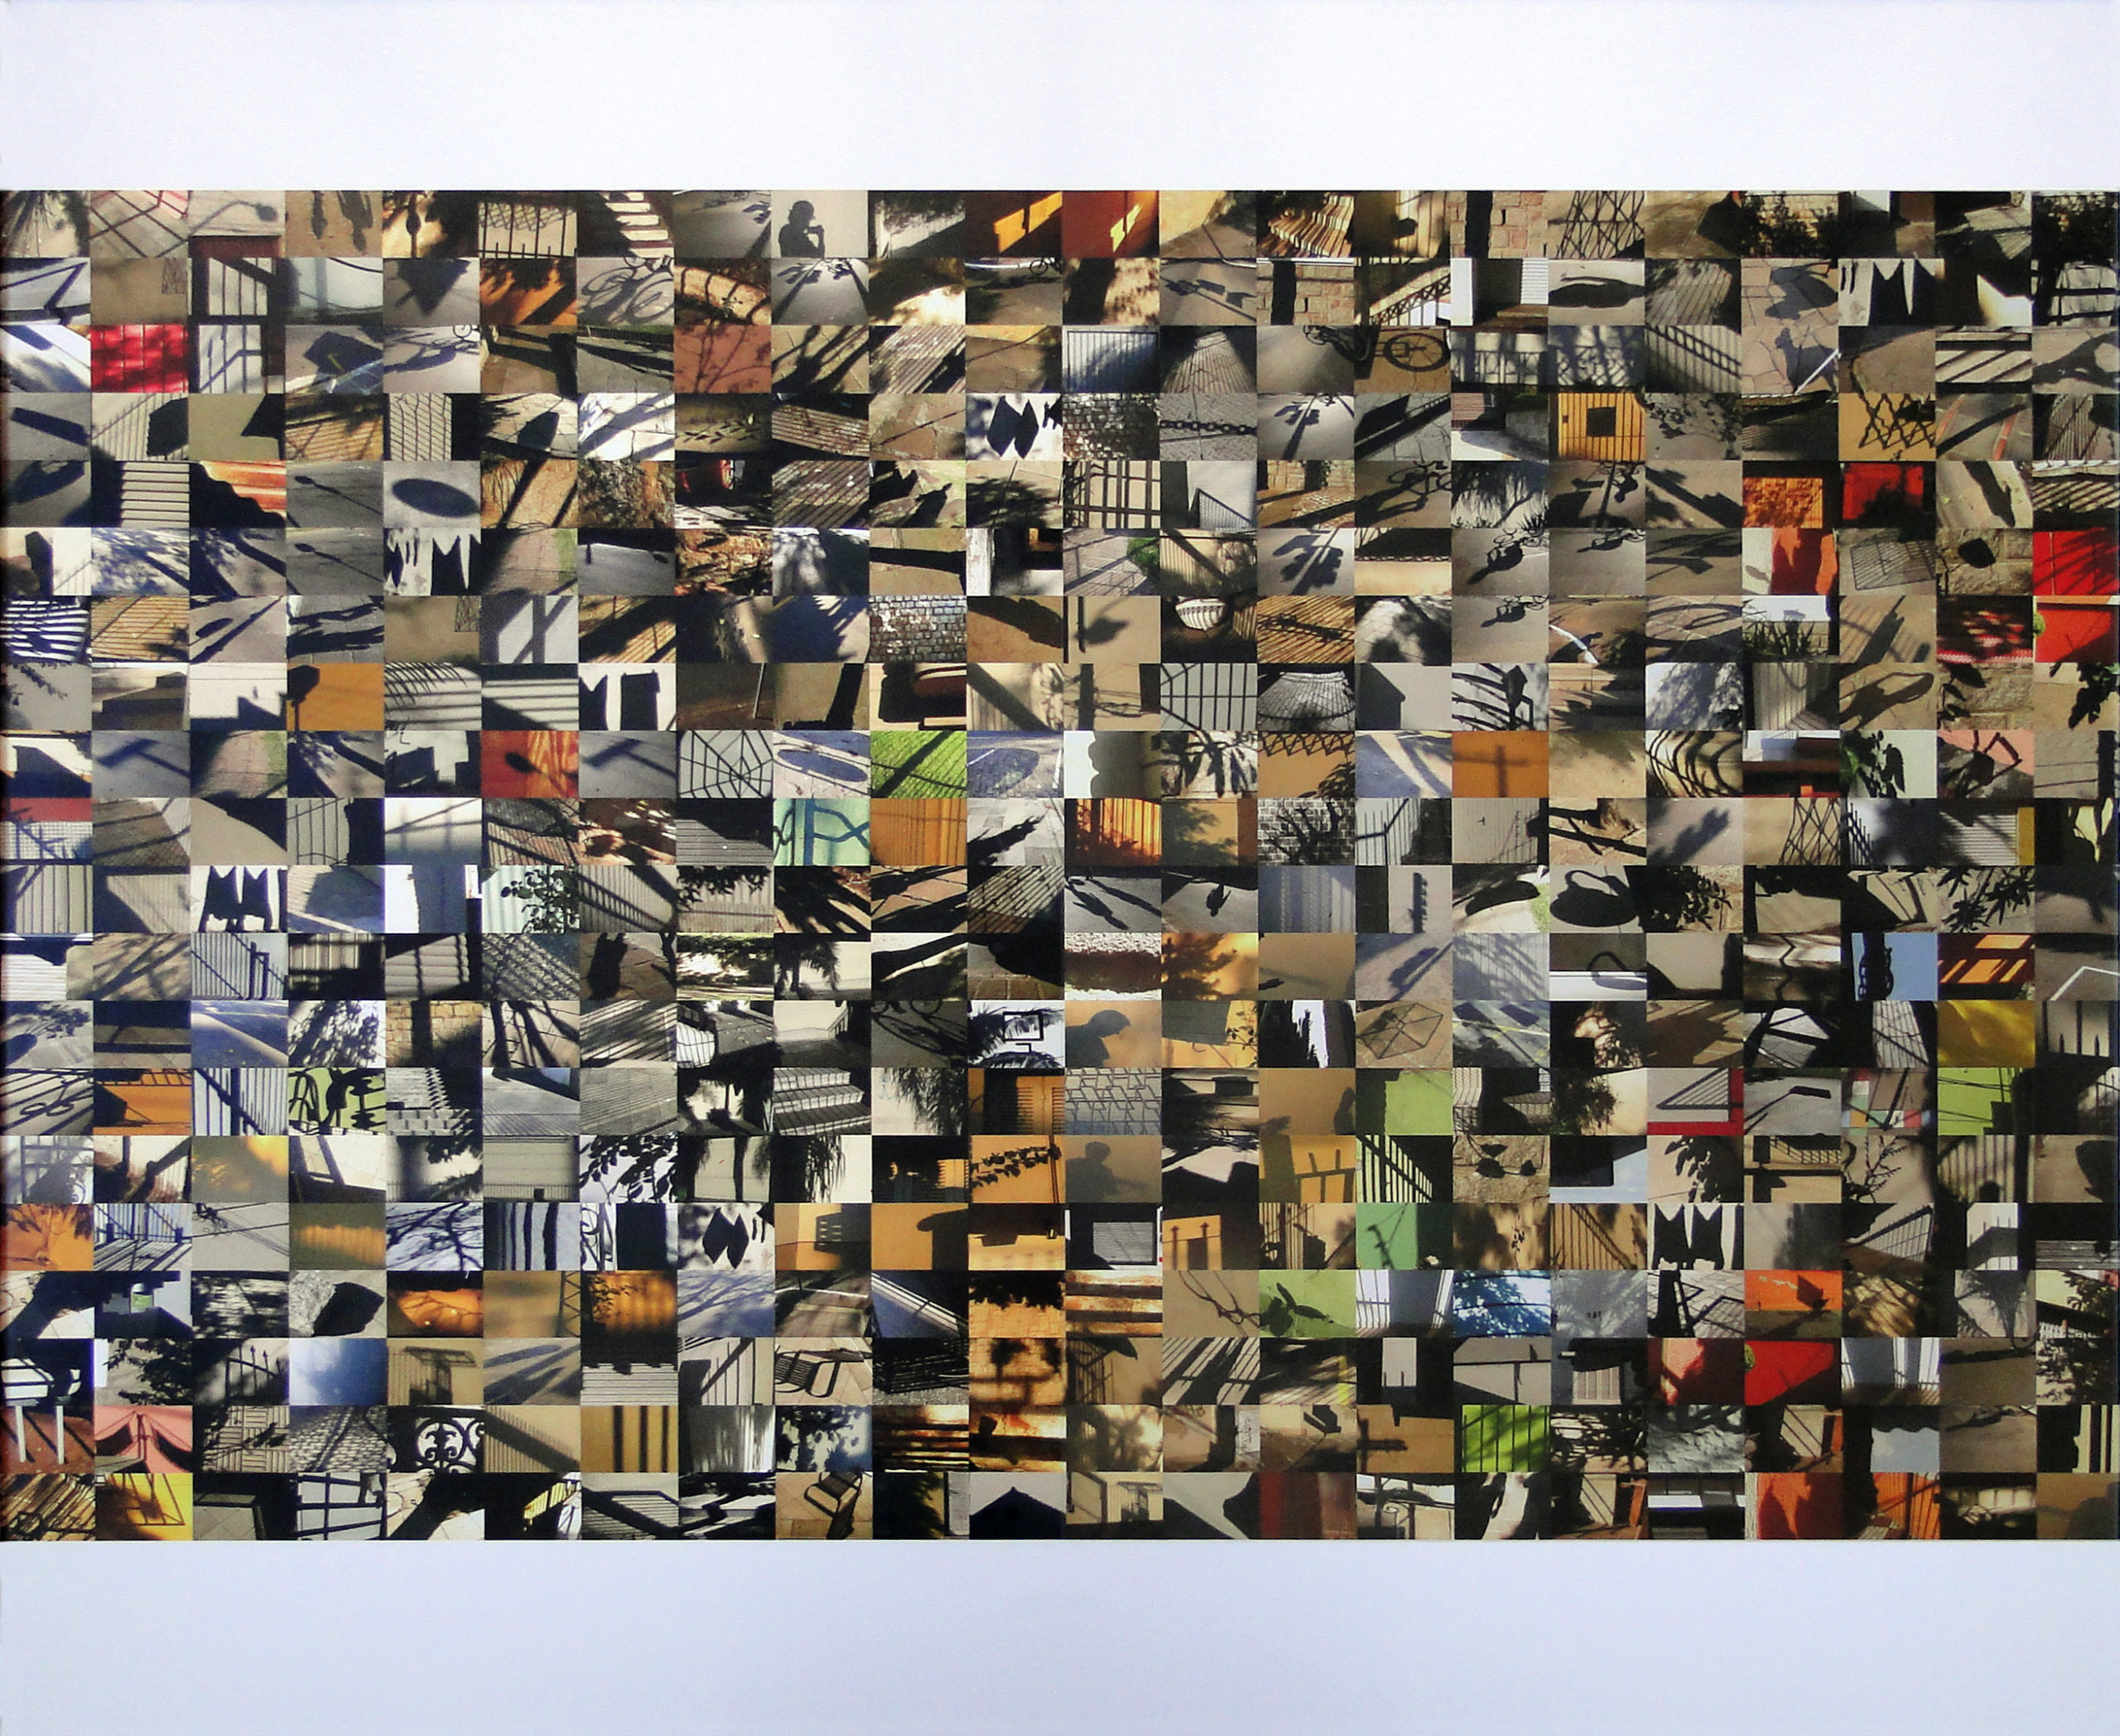 8061 - Martin Streibel, Sombras, fotografia, ed. 4, 100 x 150 cm, ass. dt. 2011